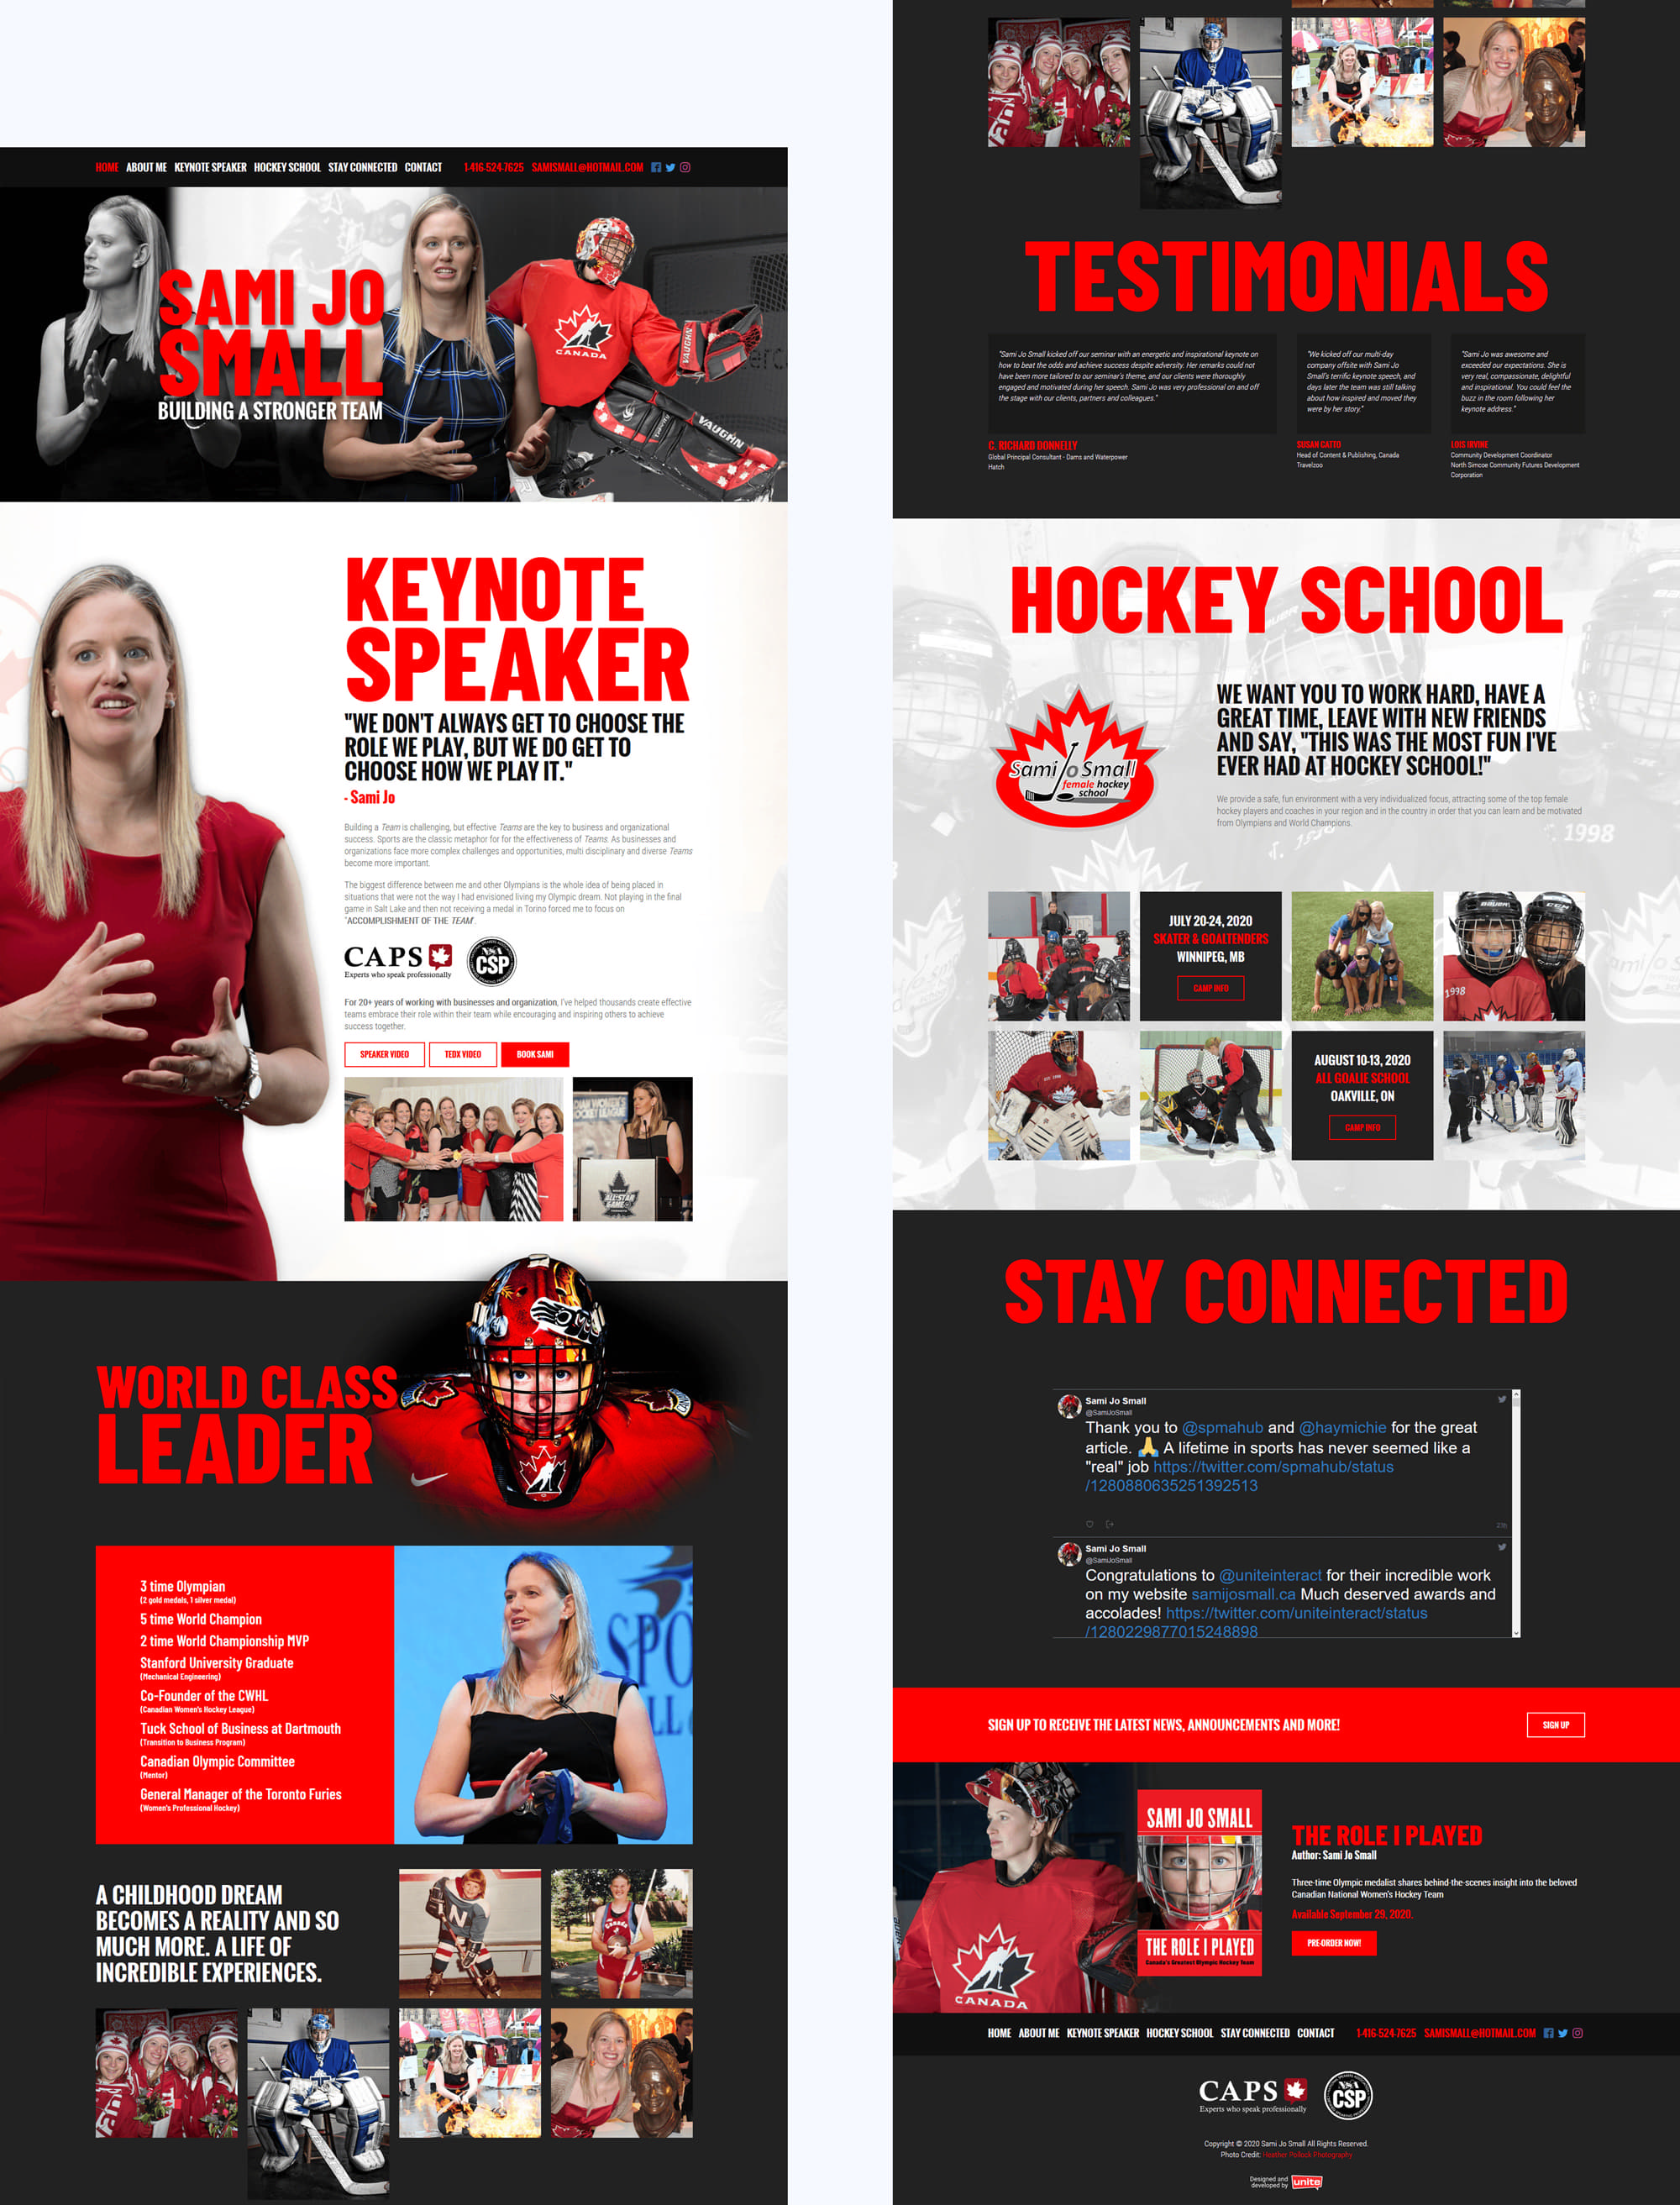 Olympic athlete website design and digital marketing inspiration